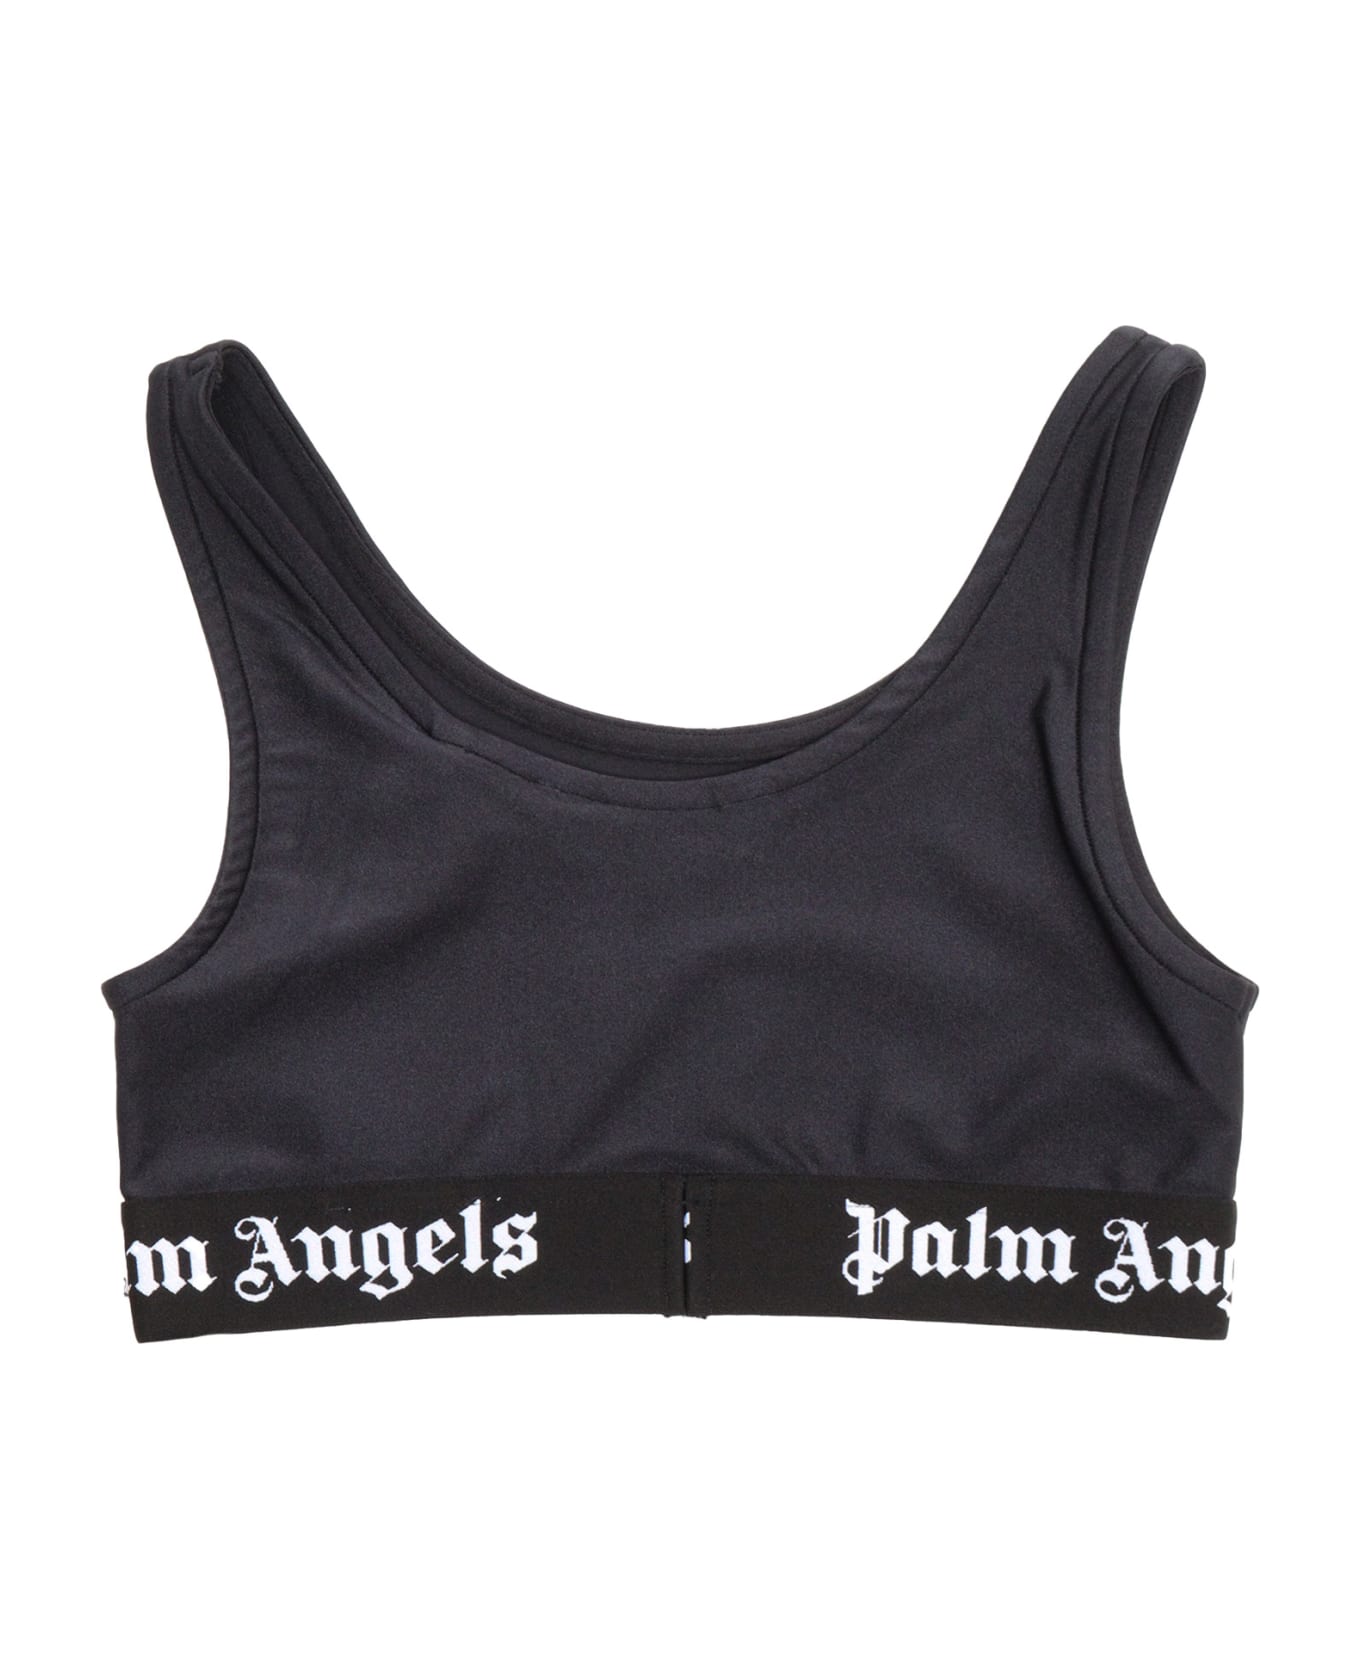 Palm Angels Black Sports Top - BLACK